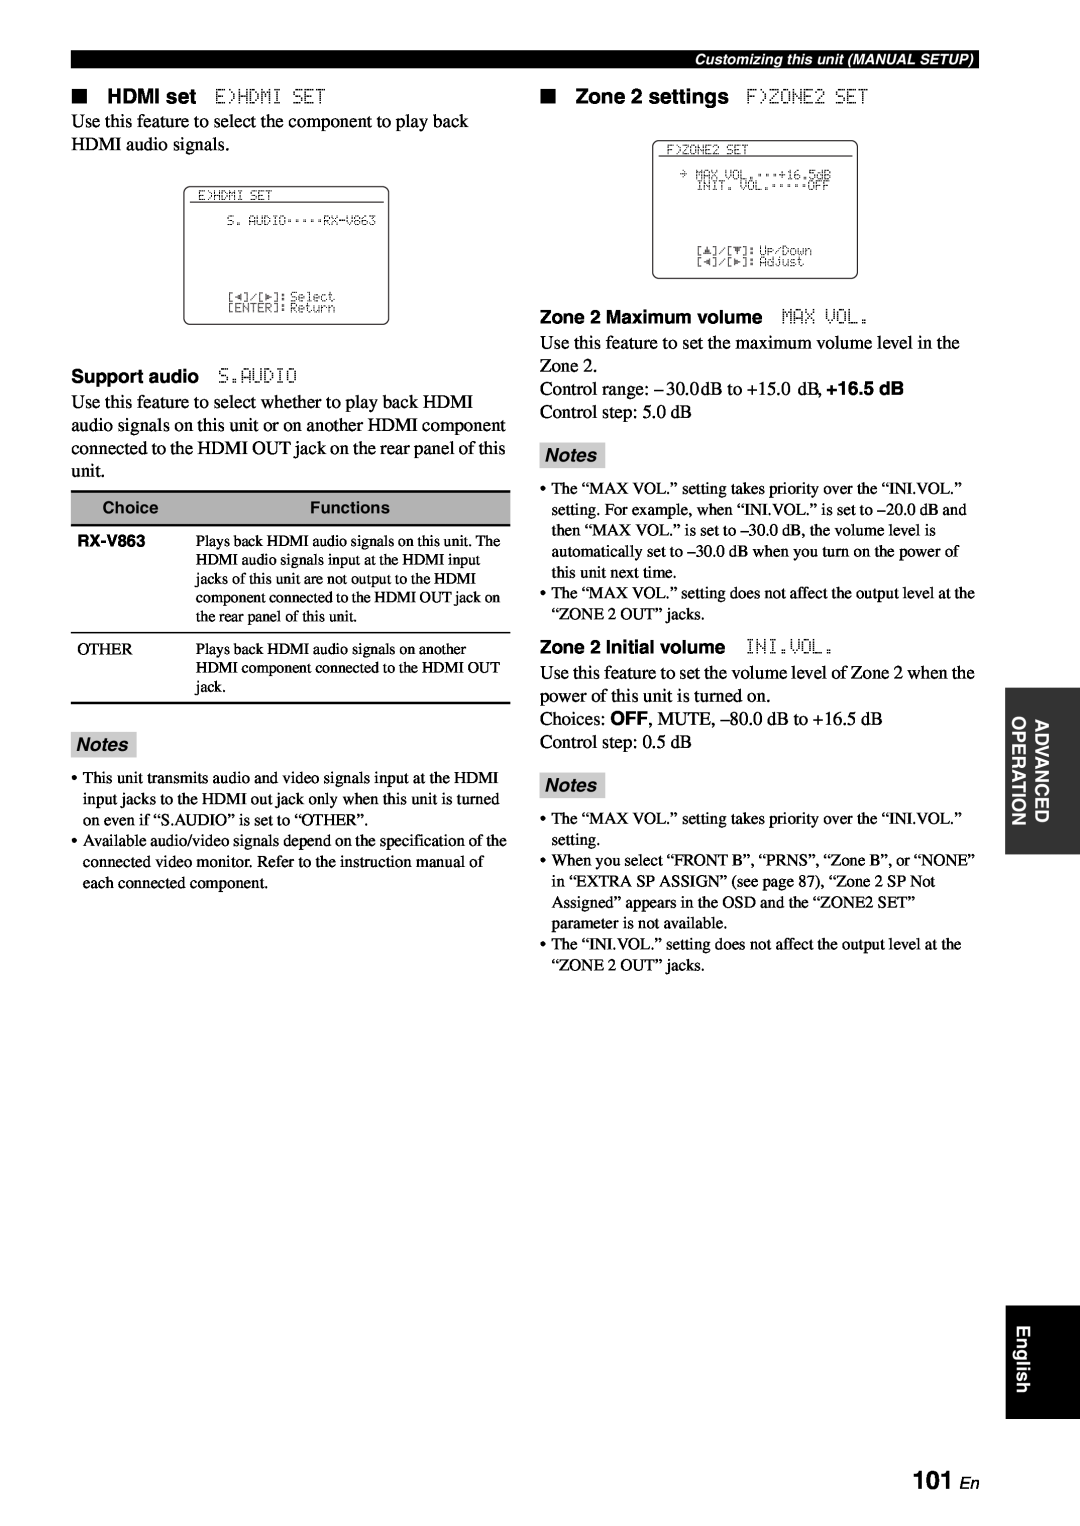 Yamaha RX-V863 owner manual 101 En, Zone 2 settings FZONE2 SET, Notes 